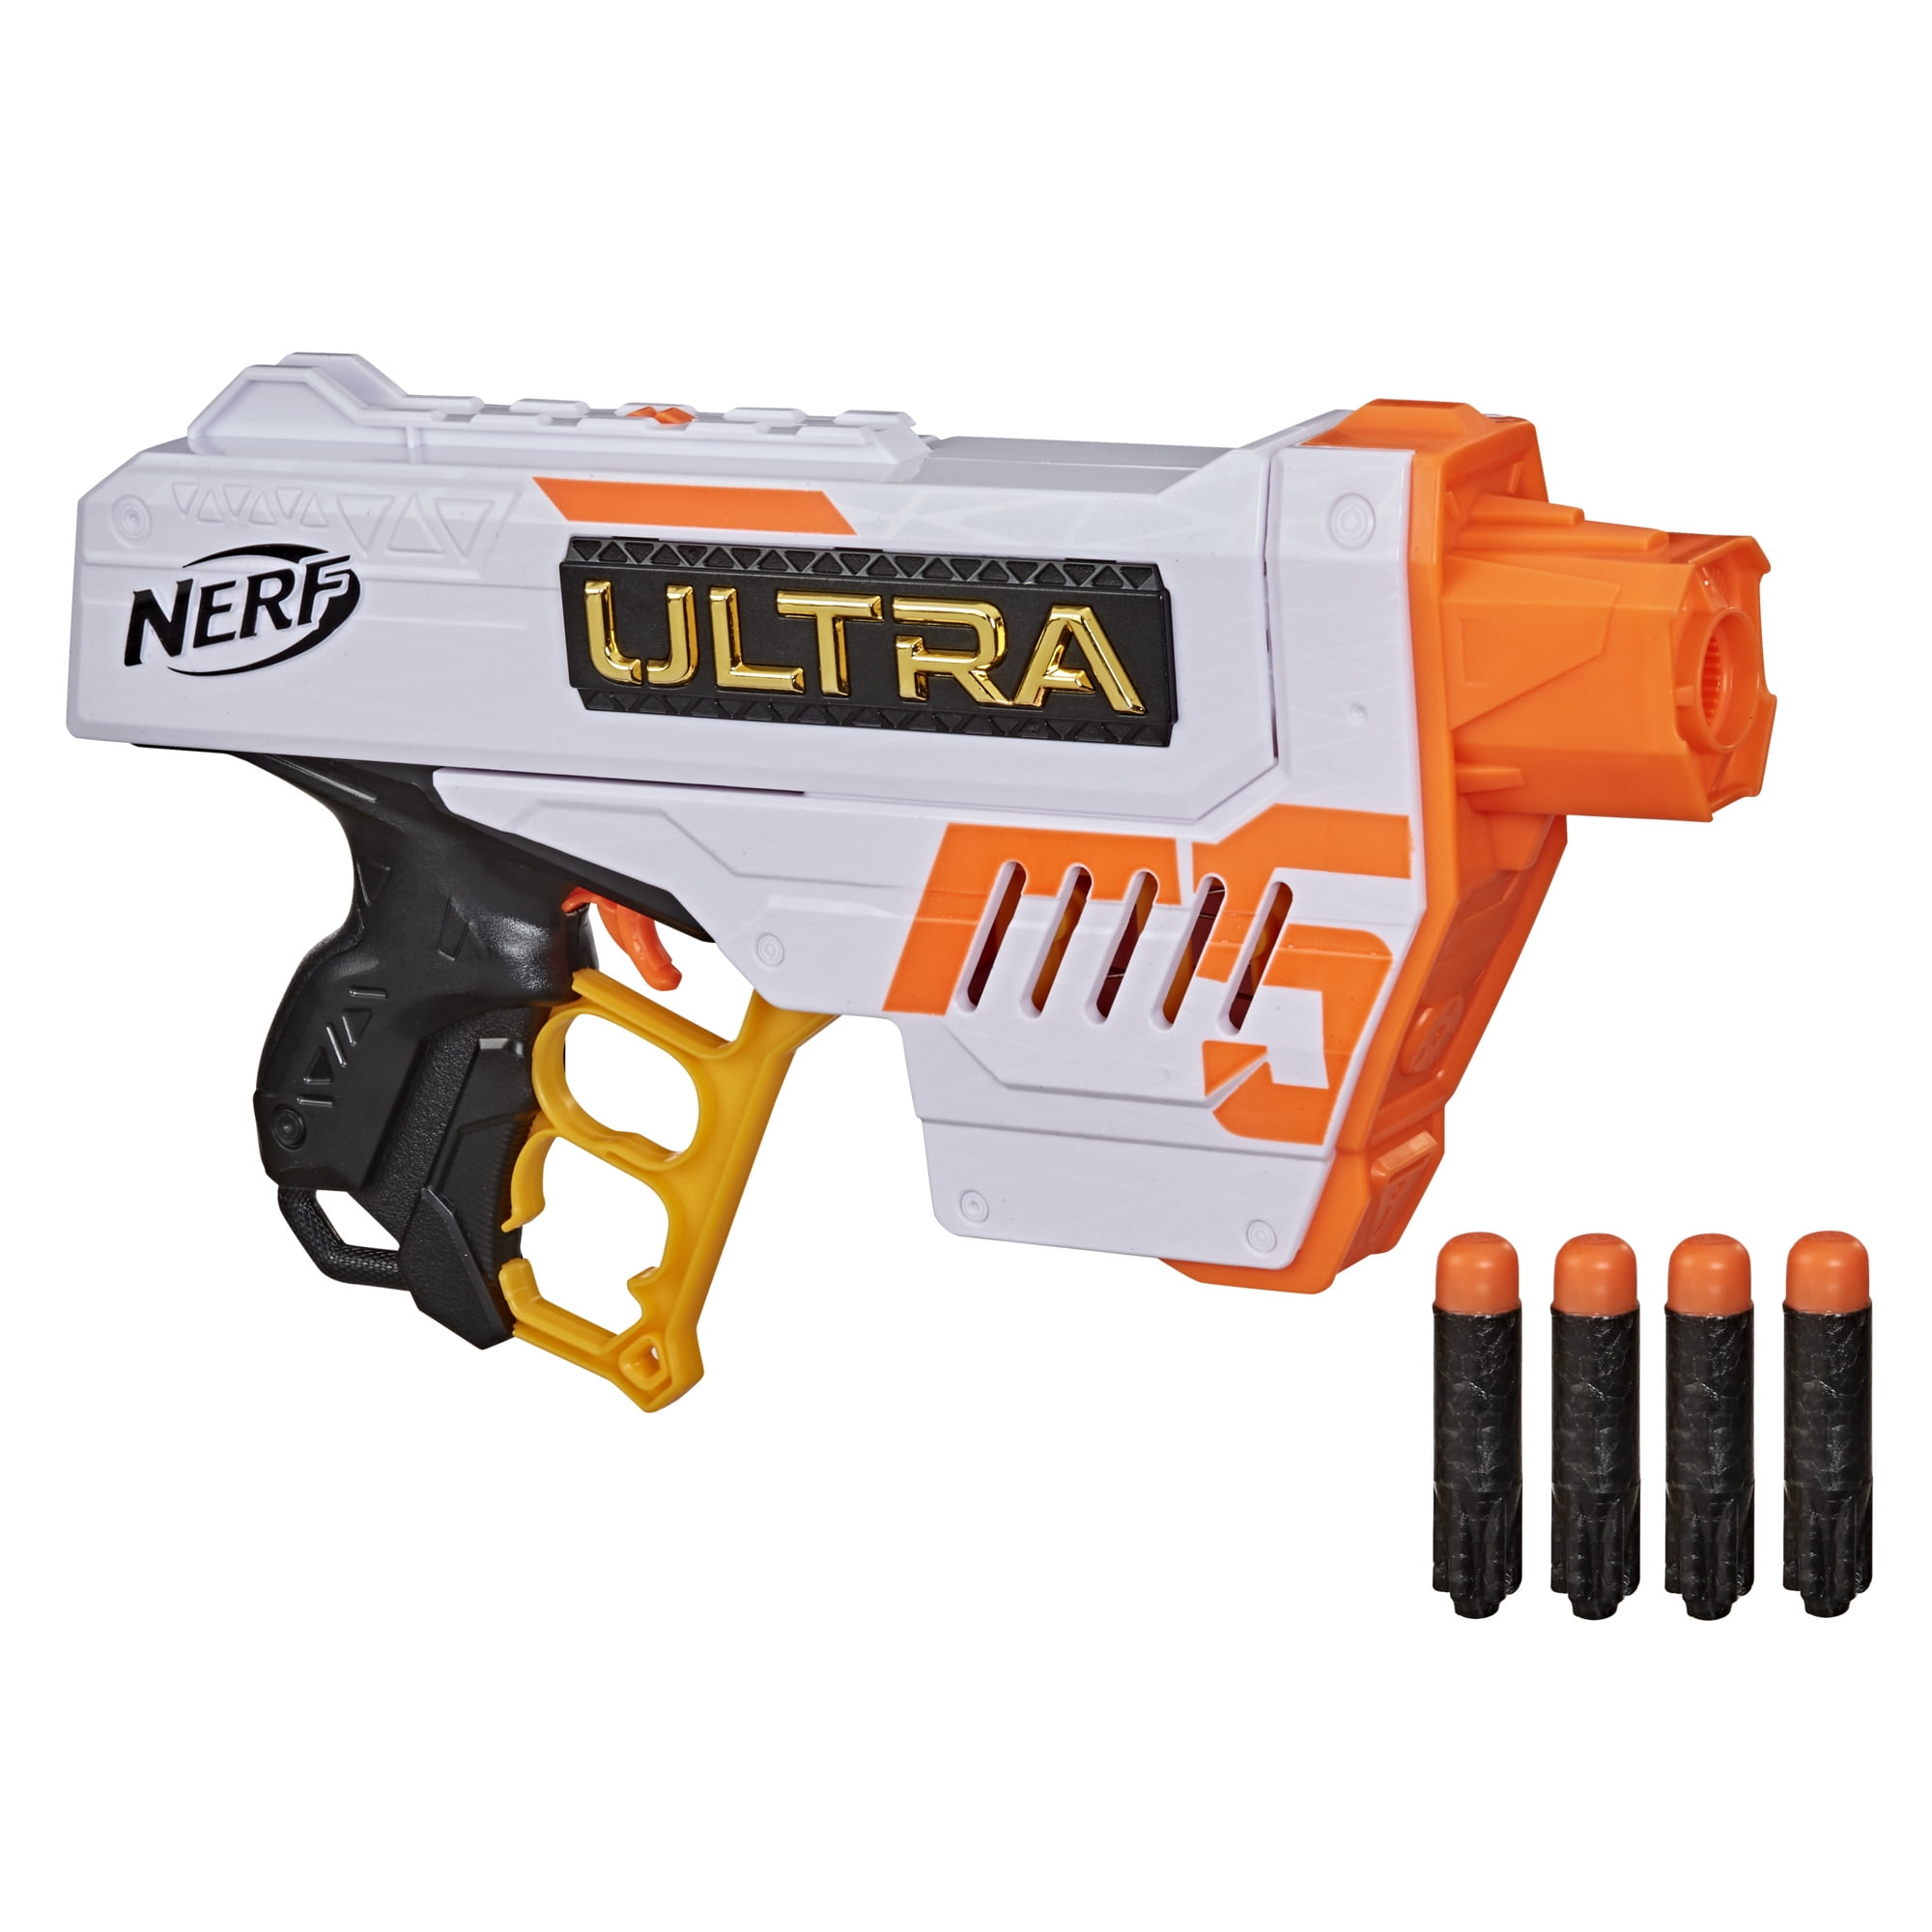 Nurf  2 Ultra gun 